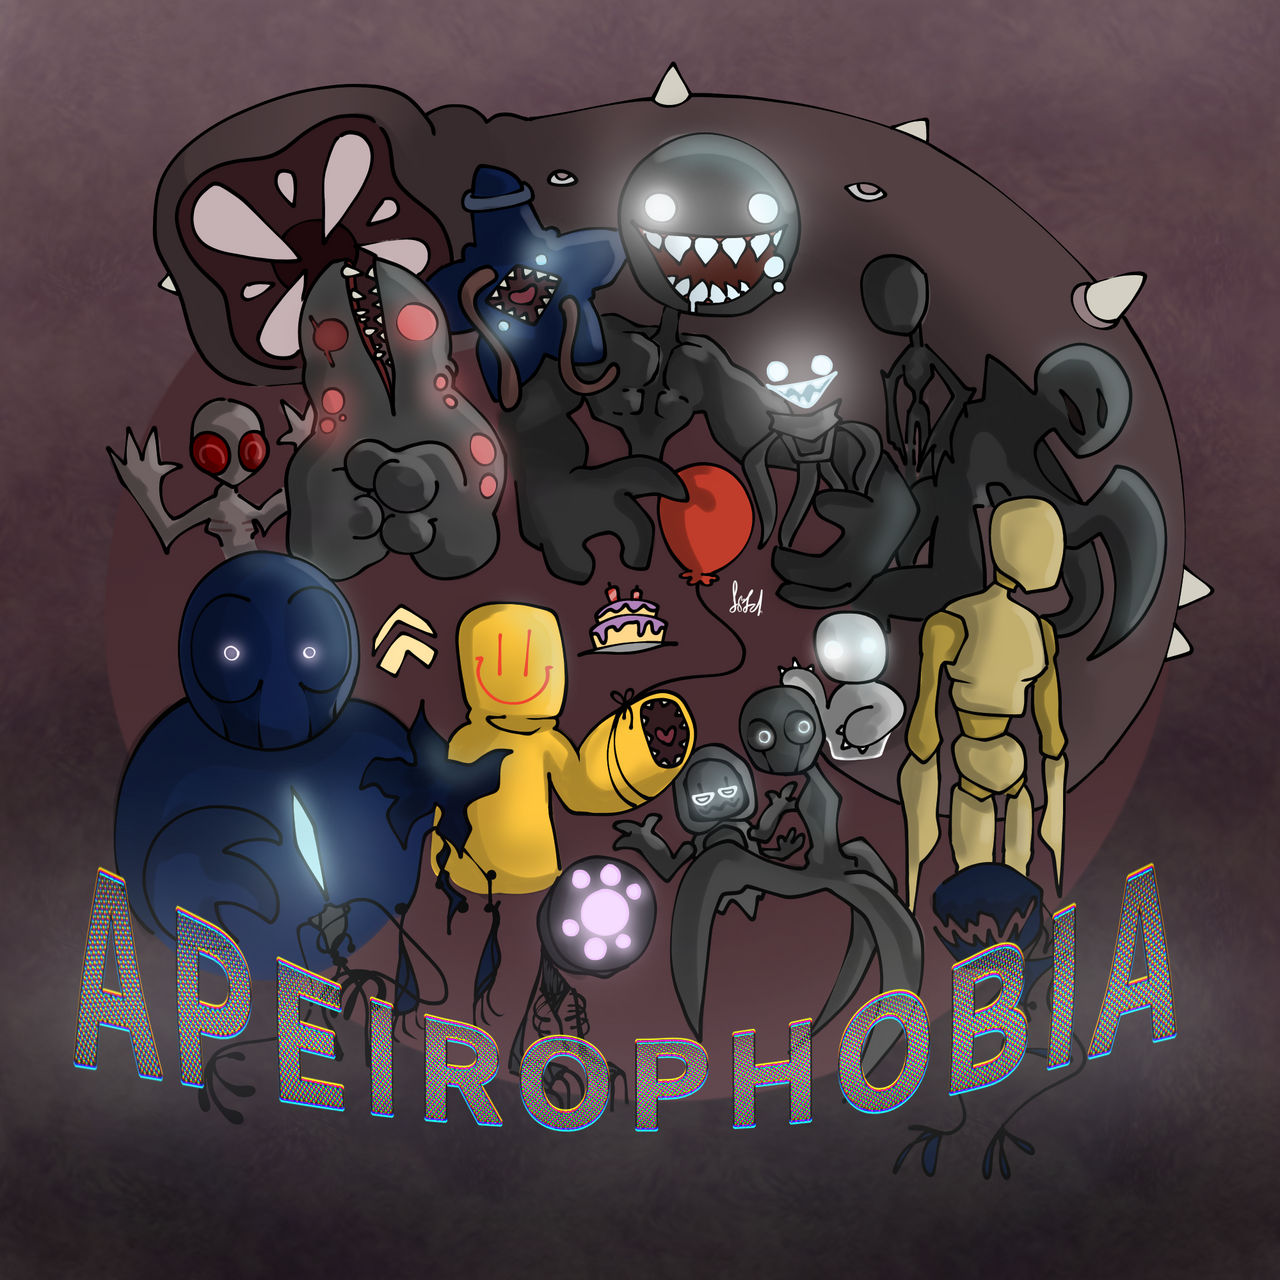 Apeirophobia, The Backrooms